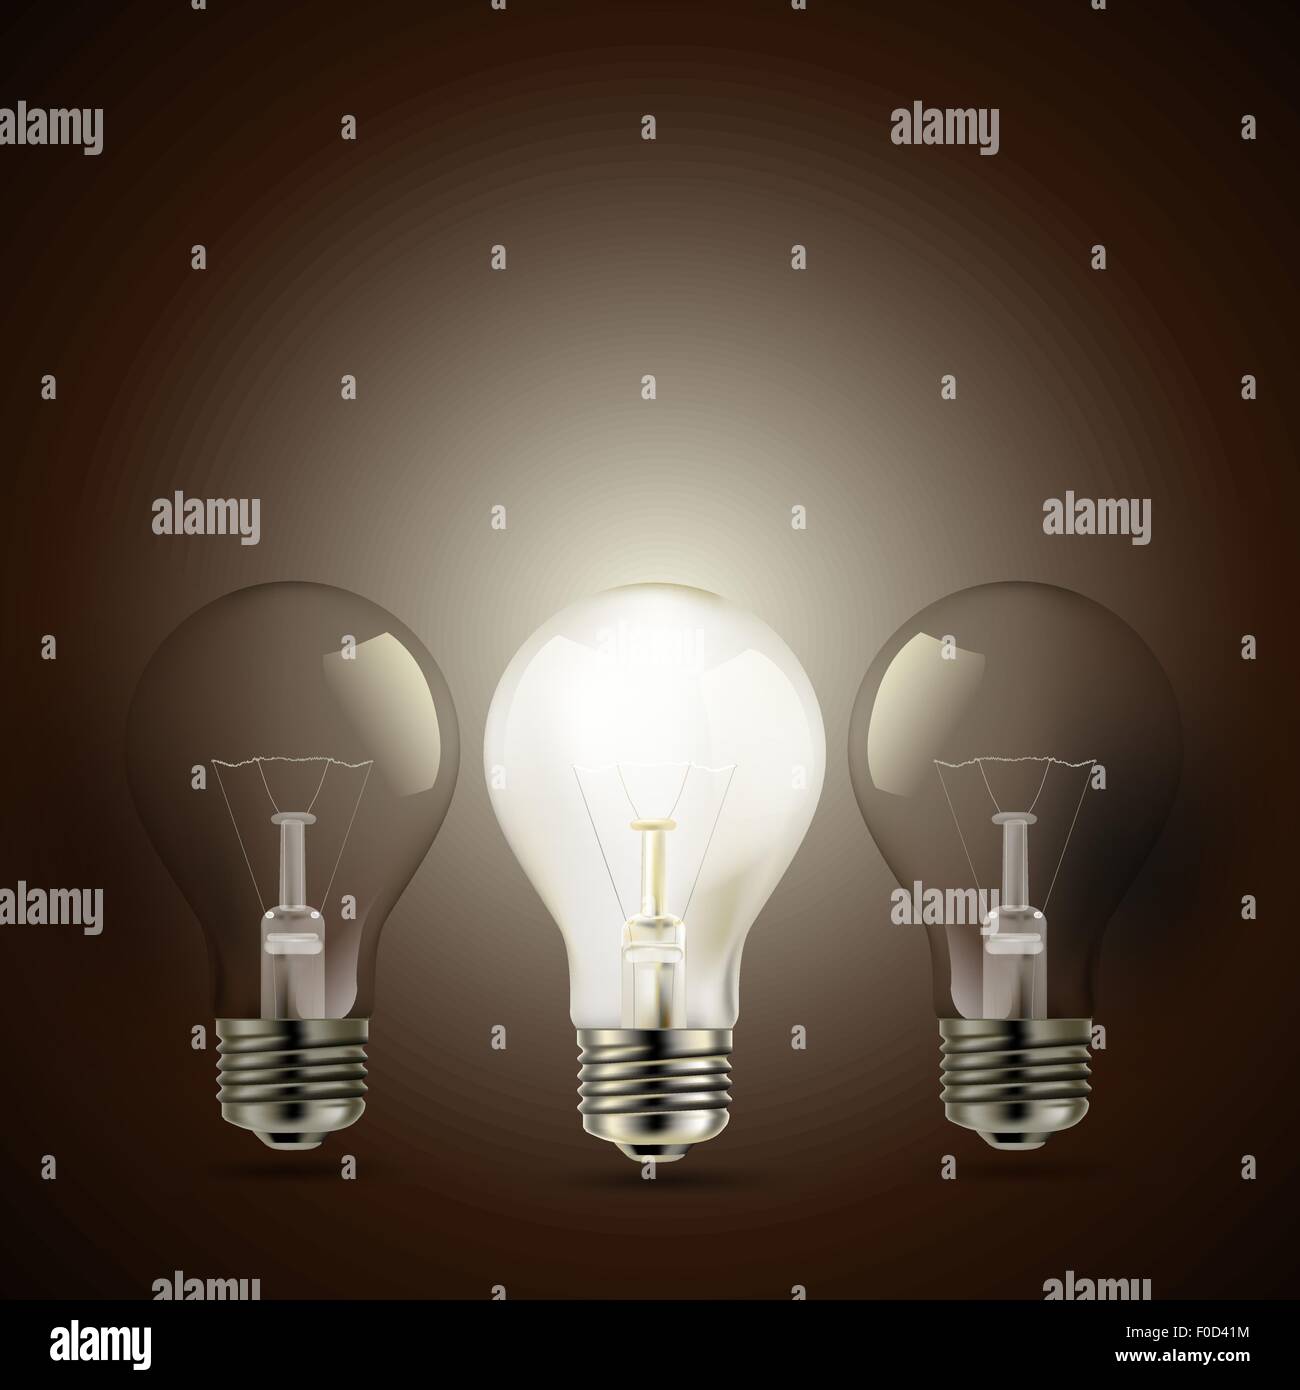 Incandescent light bulb edison Stock Vector Images - Alamy